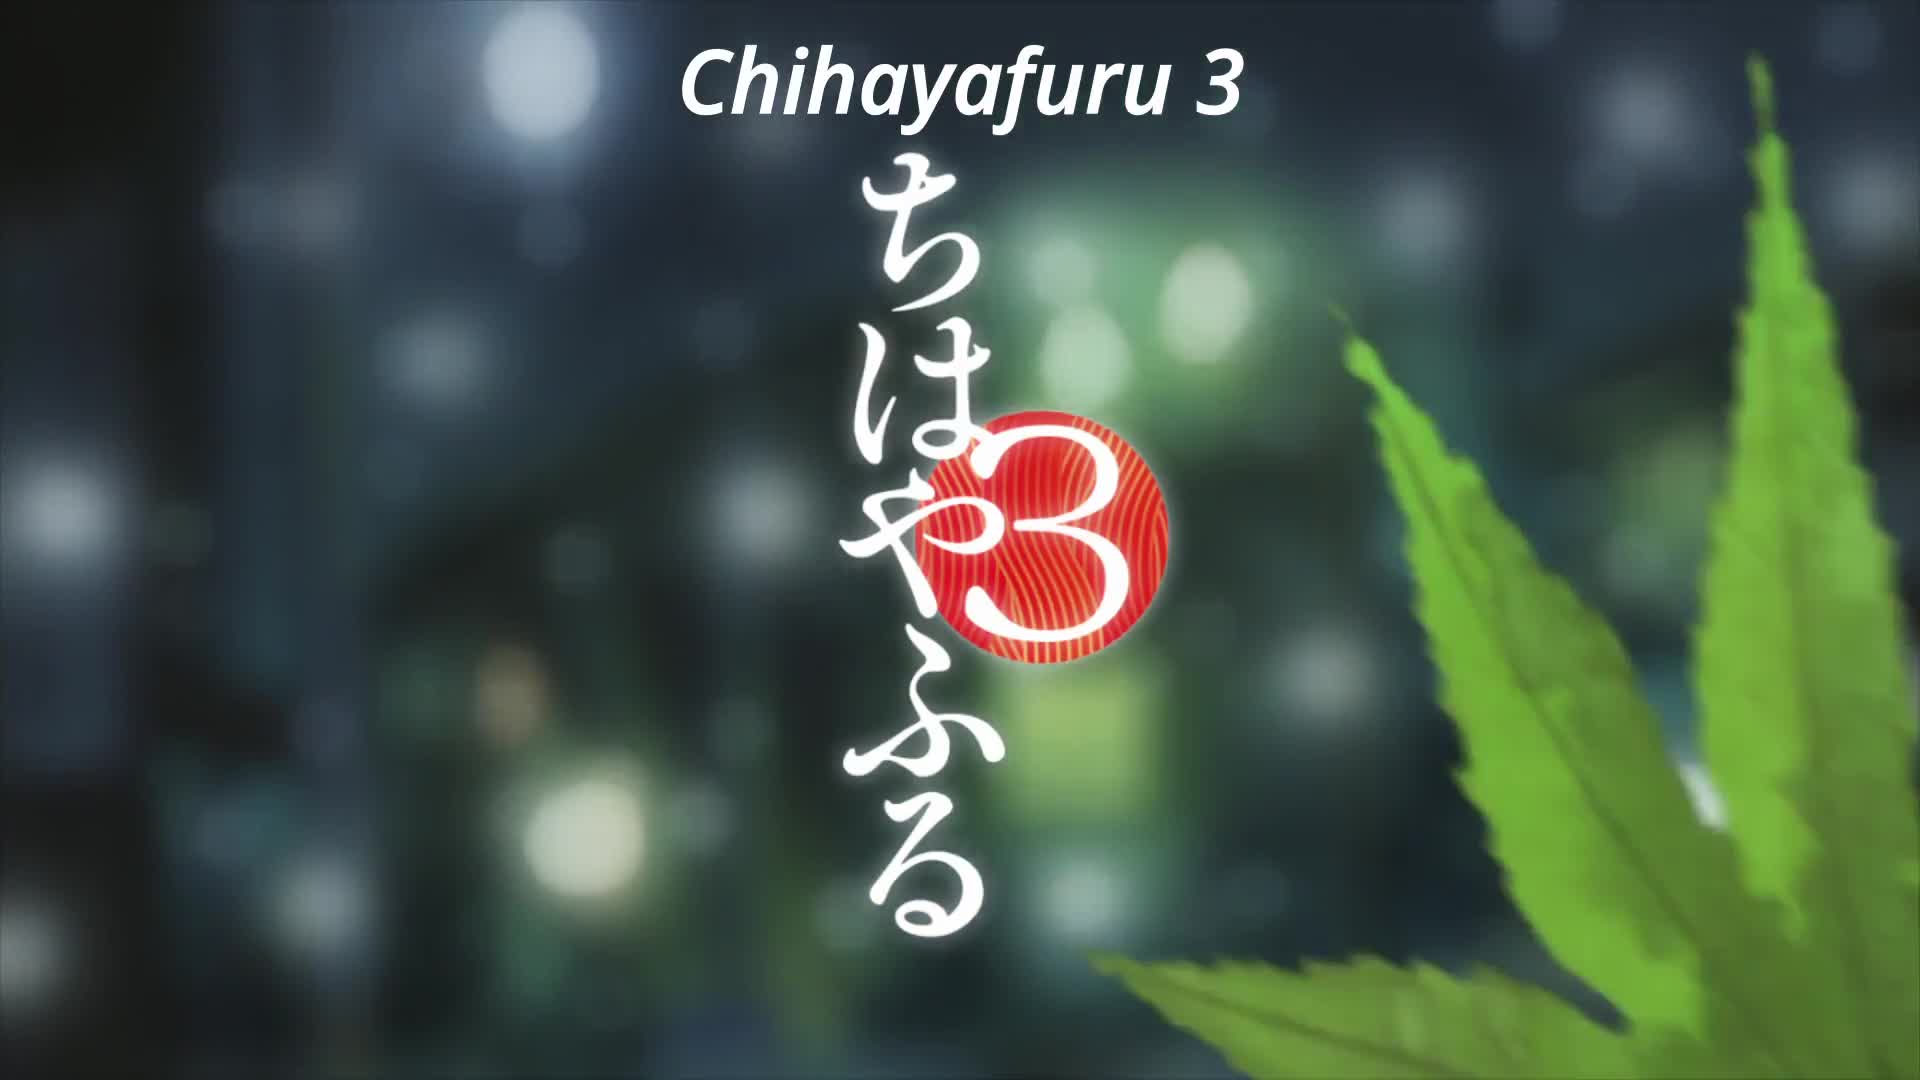 Chihayafuru 3